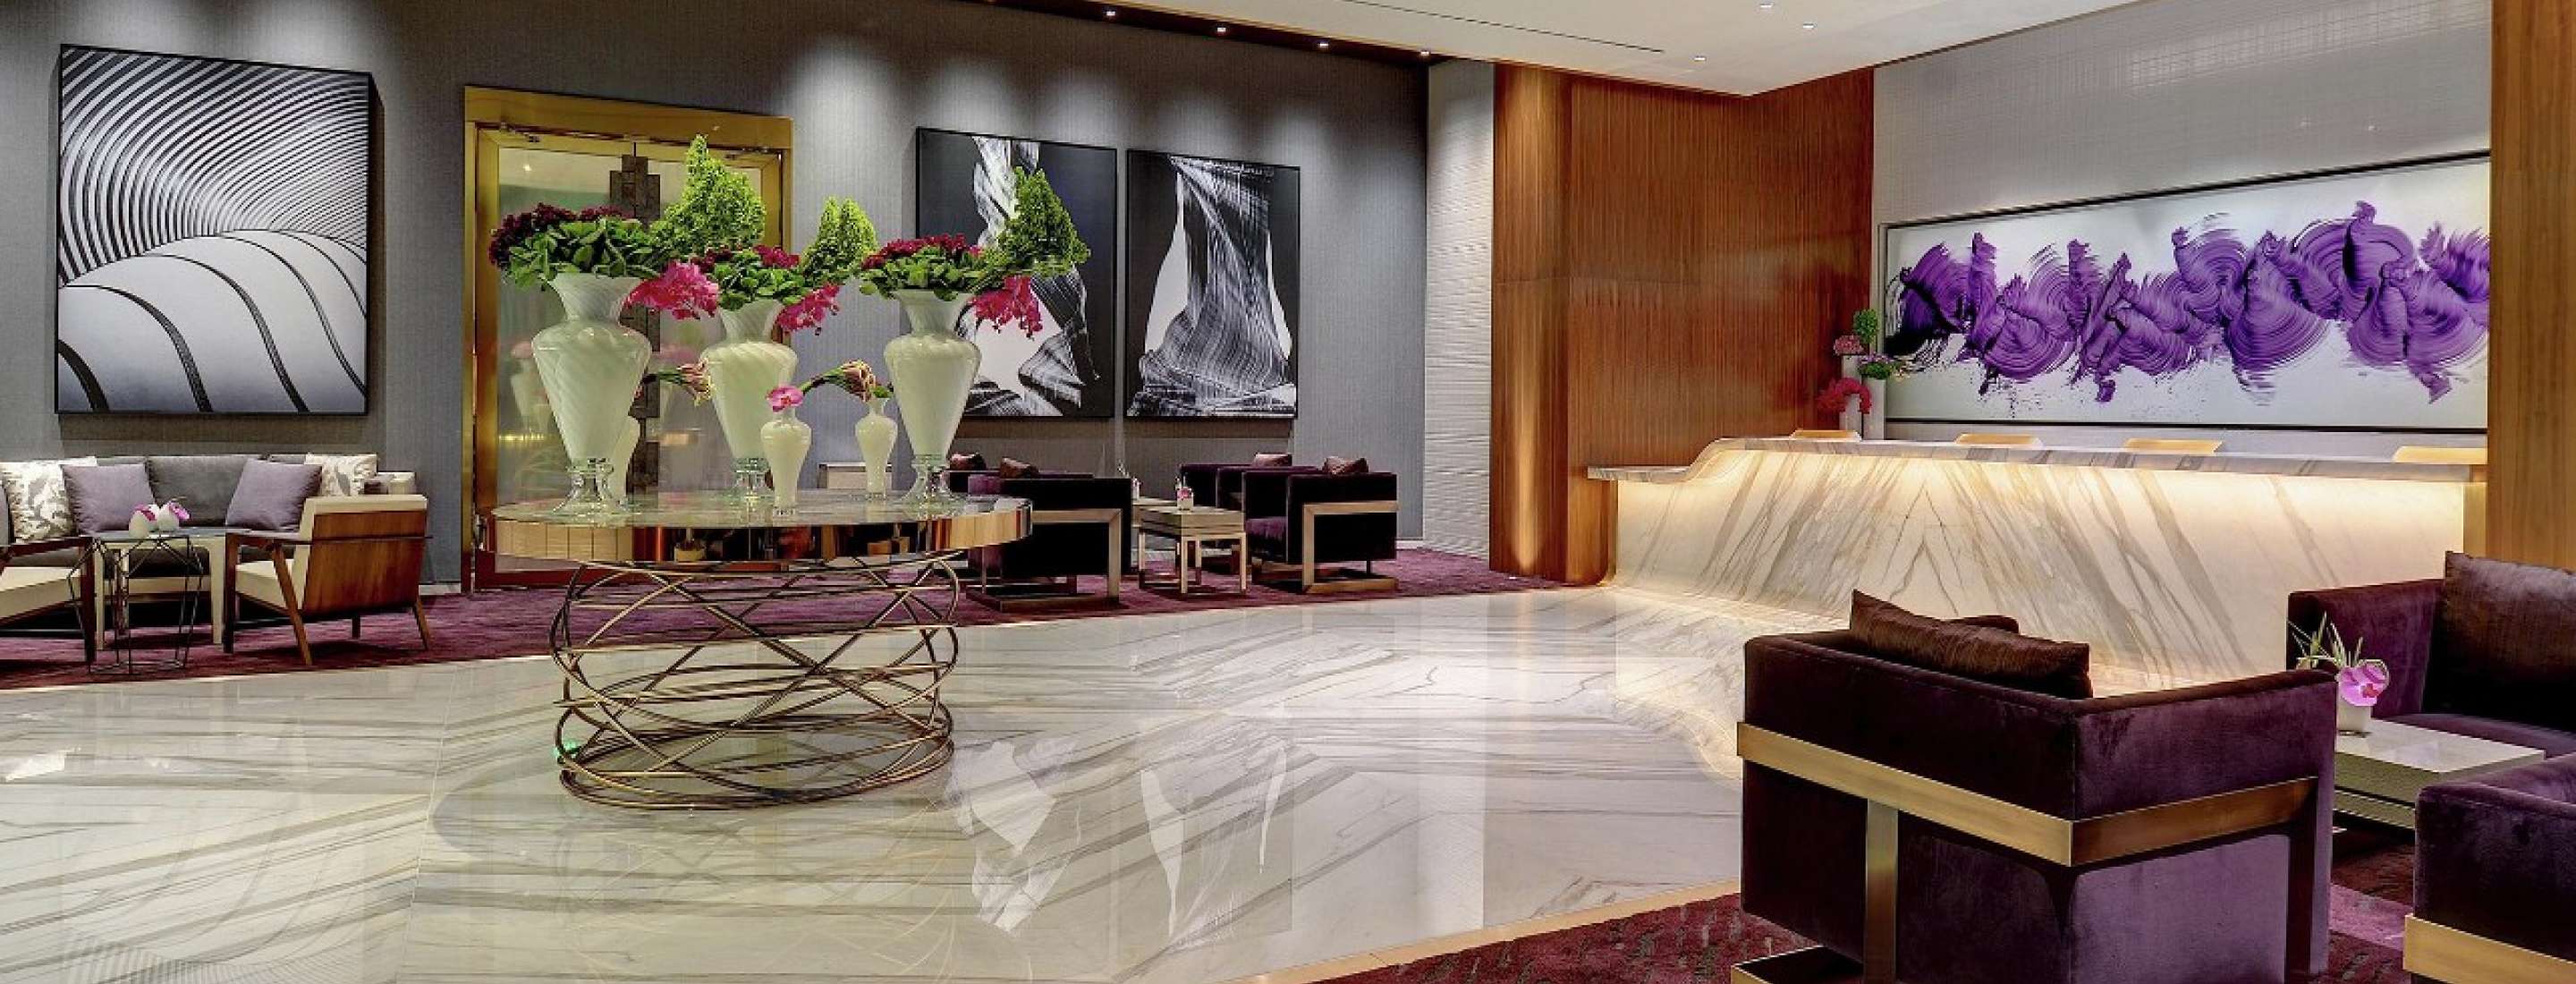 aria-hotel-tower-suites-lounge-desk.